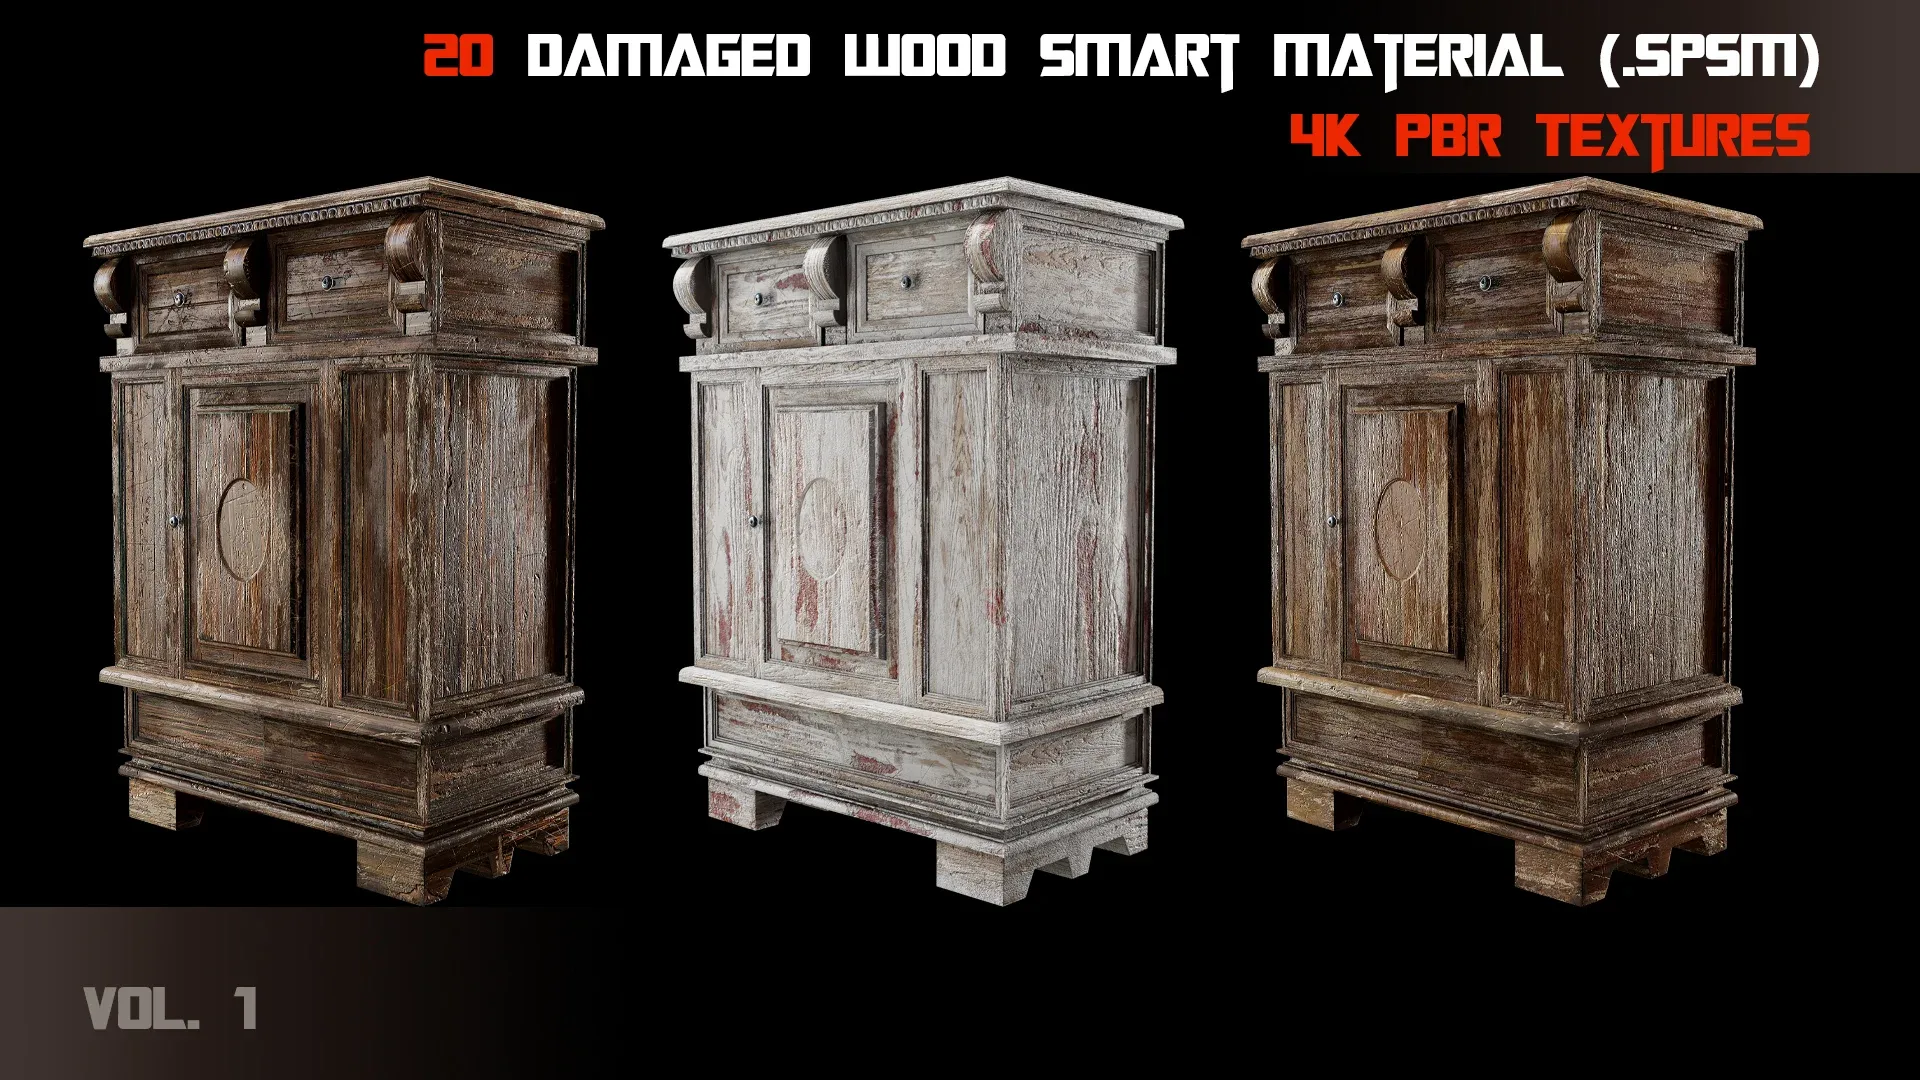 20 Damaged Wood Smart Material